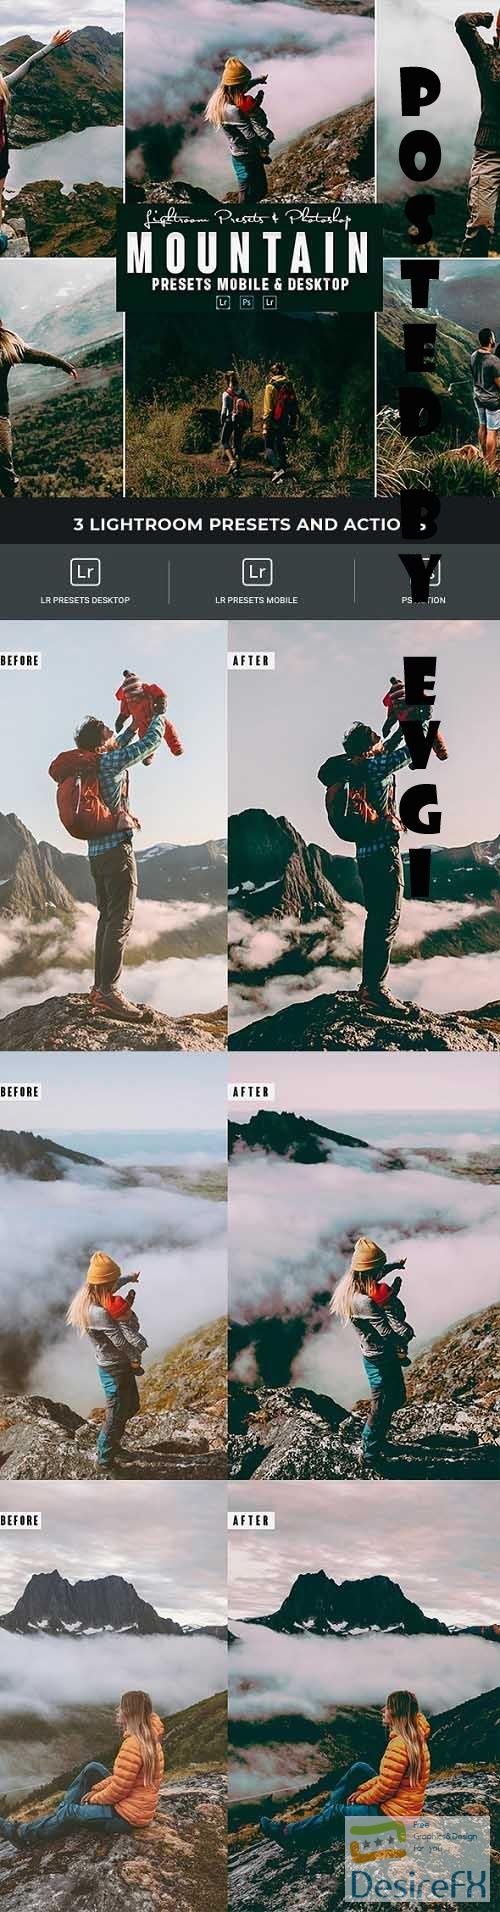 Mountain Photoshop Action &amp; Lightrom Presets - 34684093